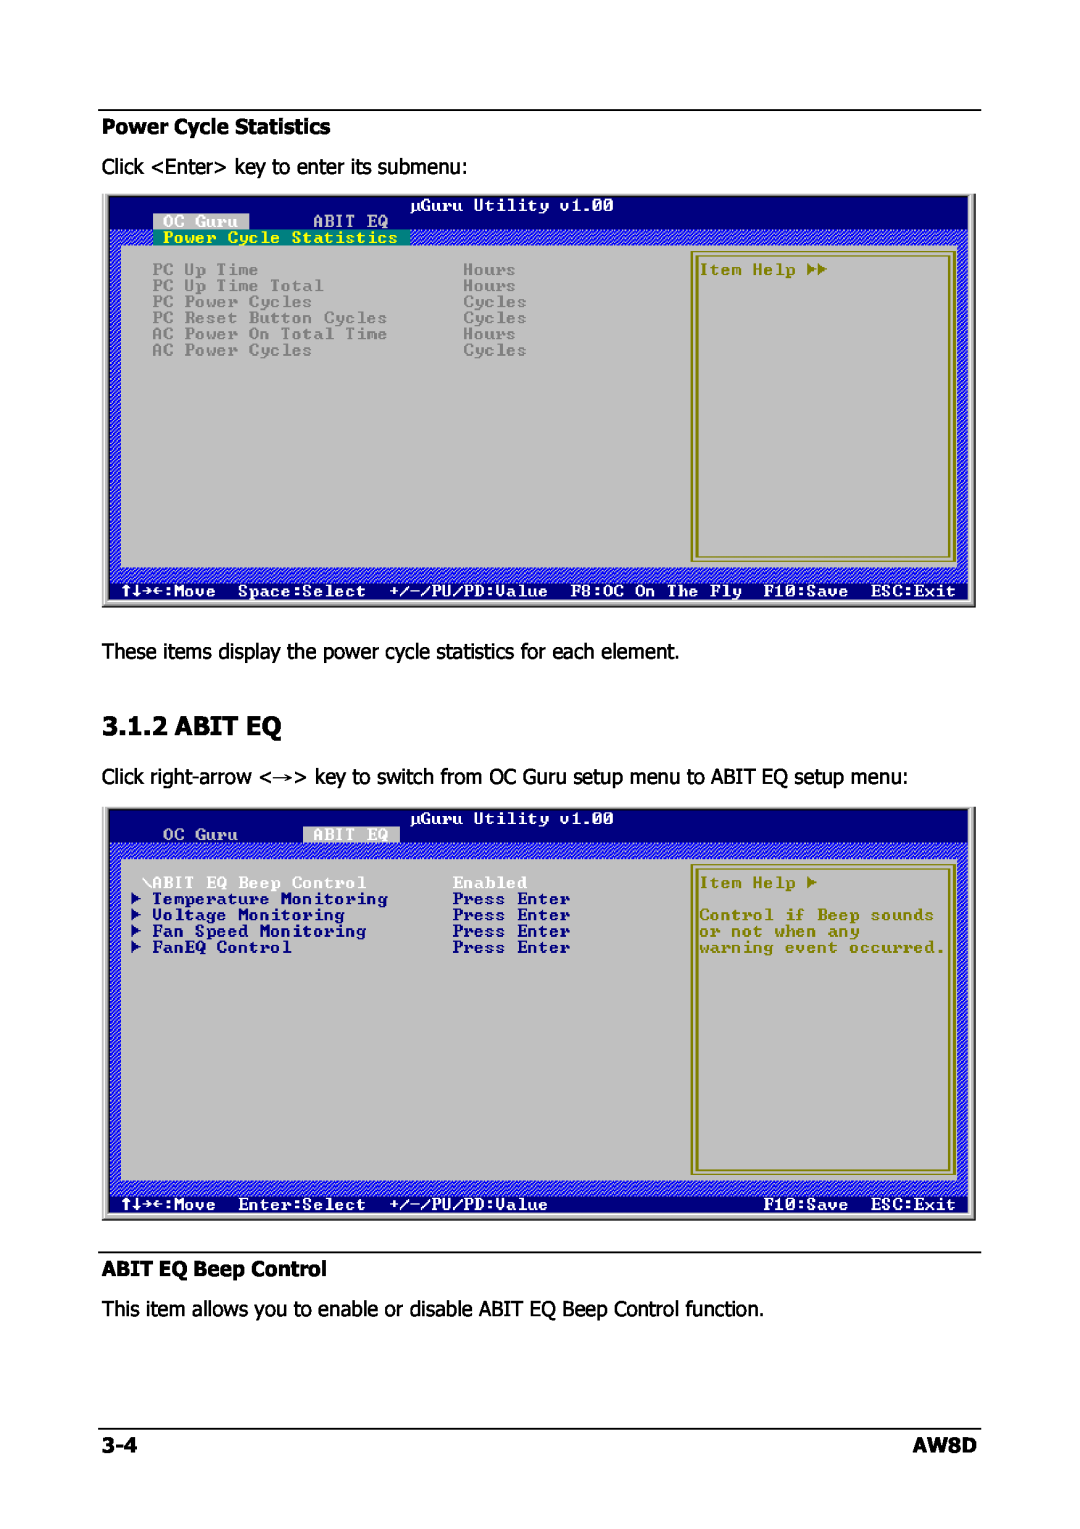 Intel AW8D user manual Abit Eq, Power Cycle Statistics Click Enter key to enter its submenu, ABIT EQ Beep Control 